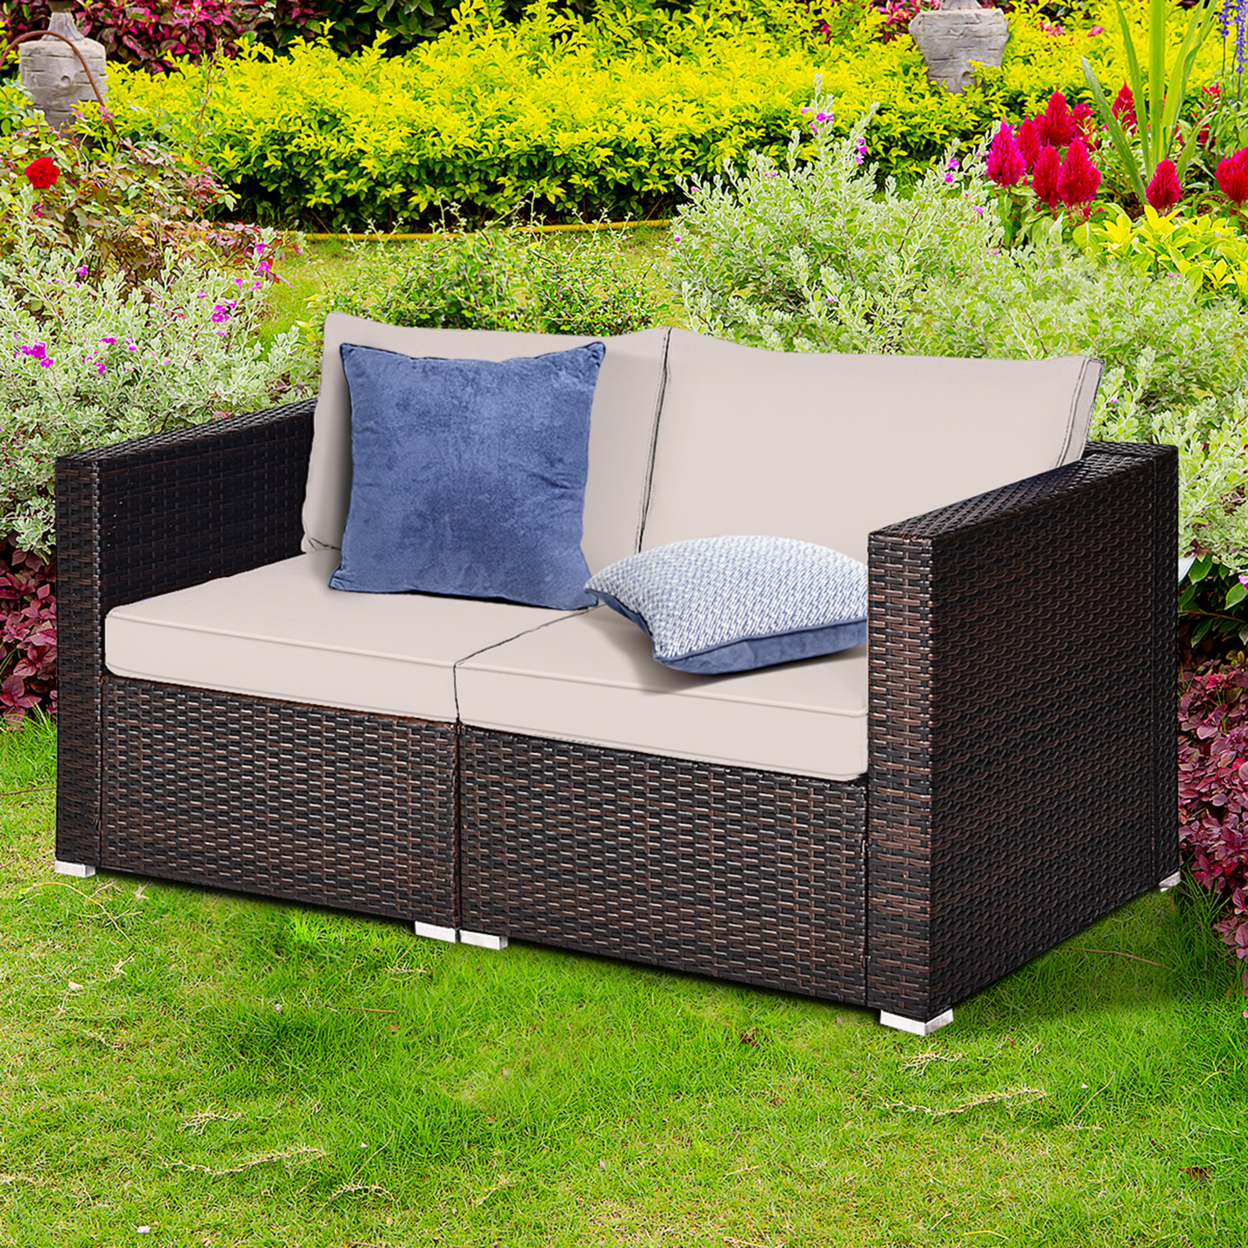 4PCS Rattan Corner Sofa Set Patio Outdoor Furniture Set W/ Beige Cushions